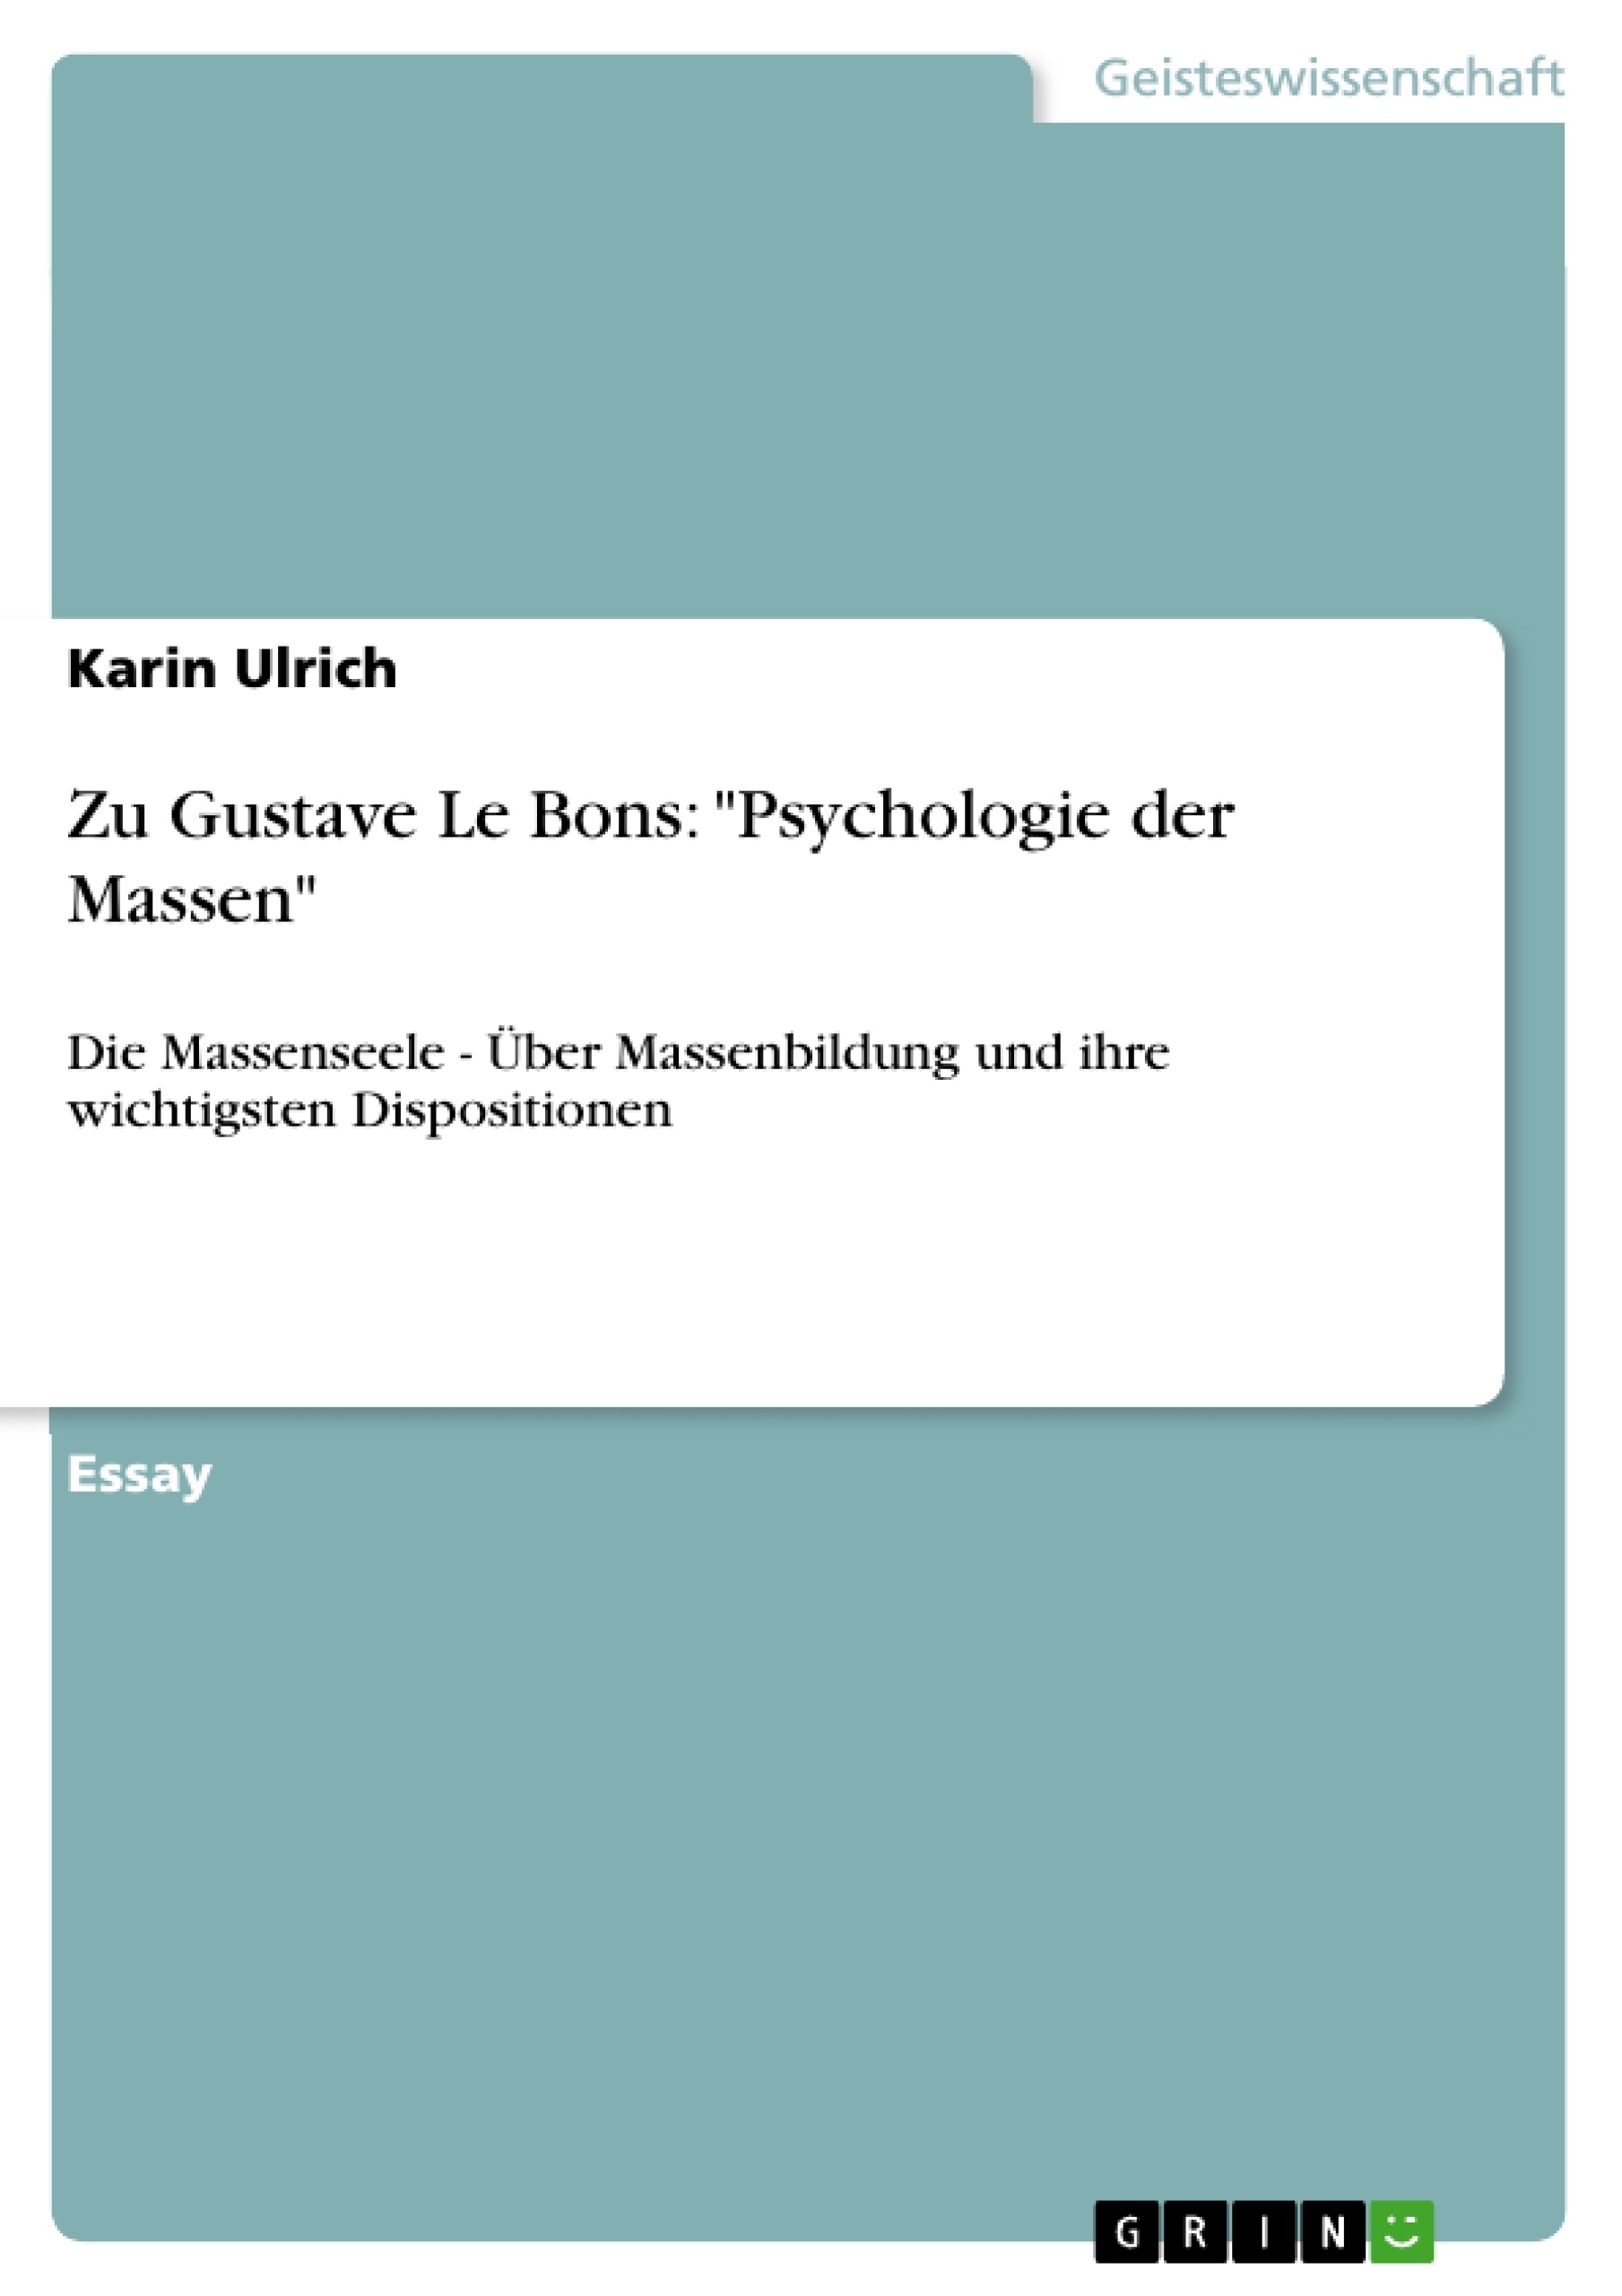 Title: Zu Gustave Le Bons: "Psychologie der Massen"